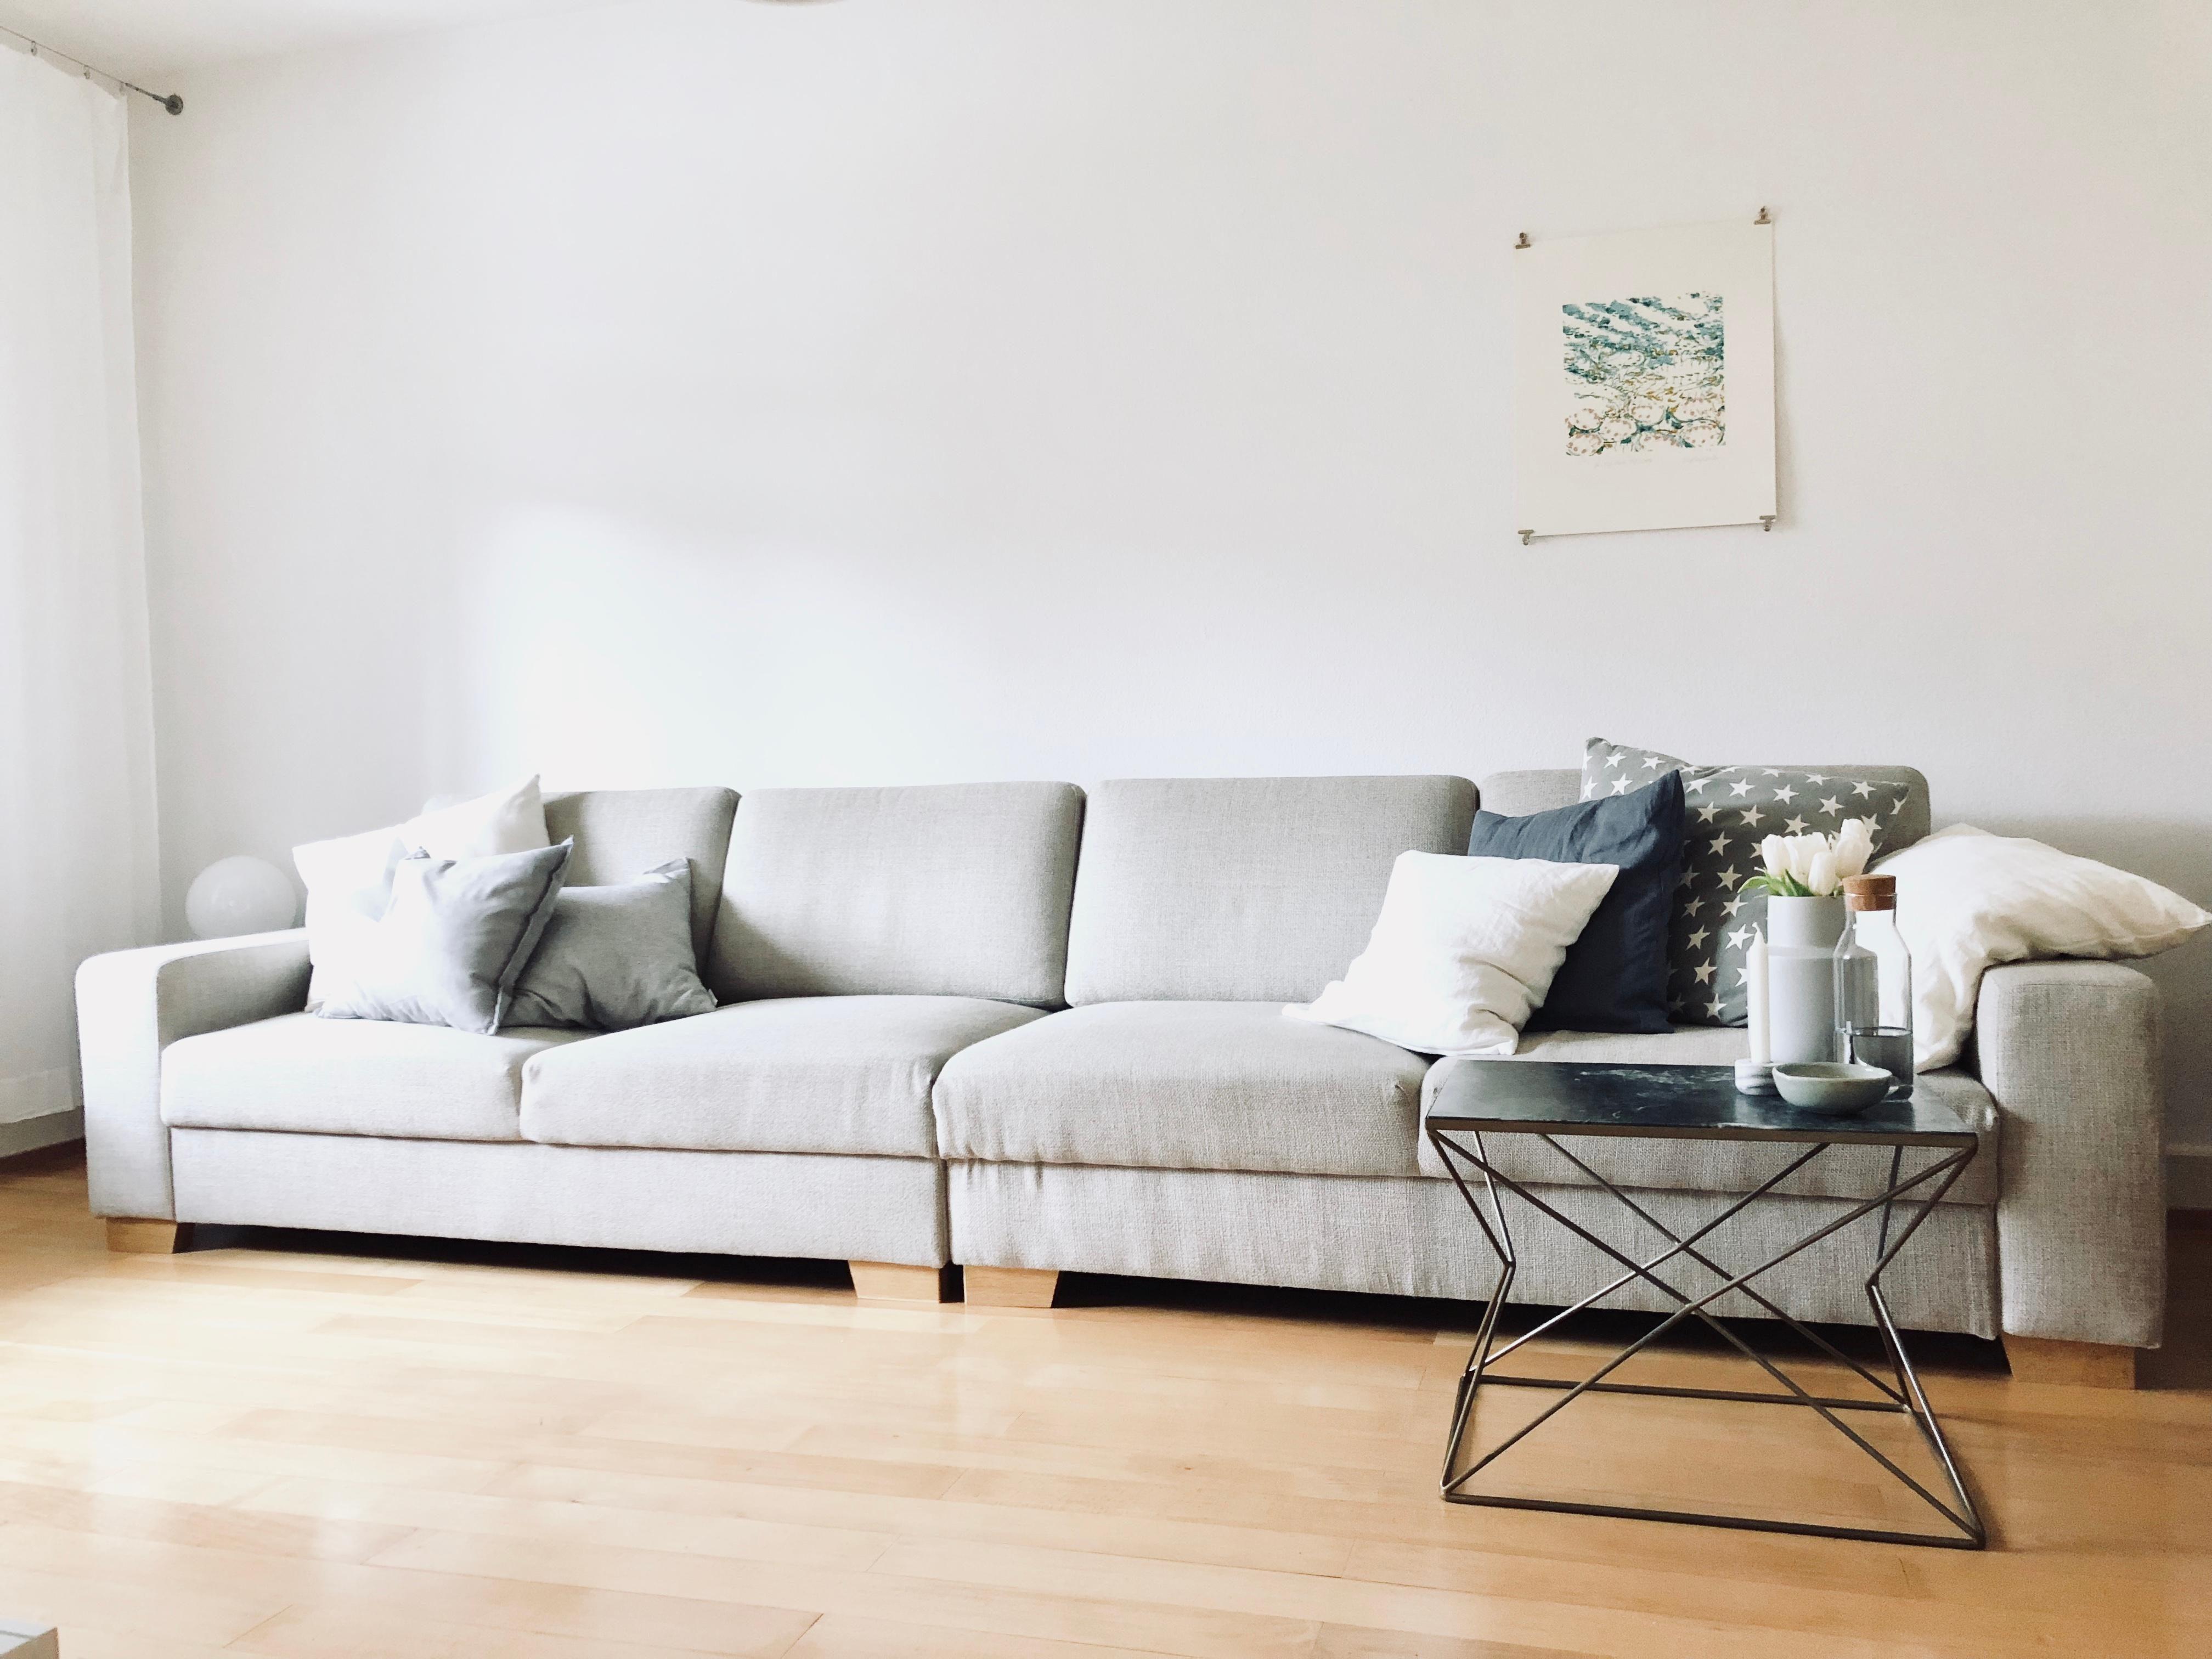 Sonne an Dec! #livingroom #homedecor #homeinspo #scandinavianstyle #hygge #interior #nordicliving #greylover  